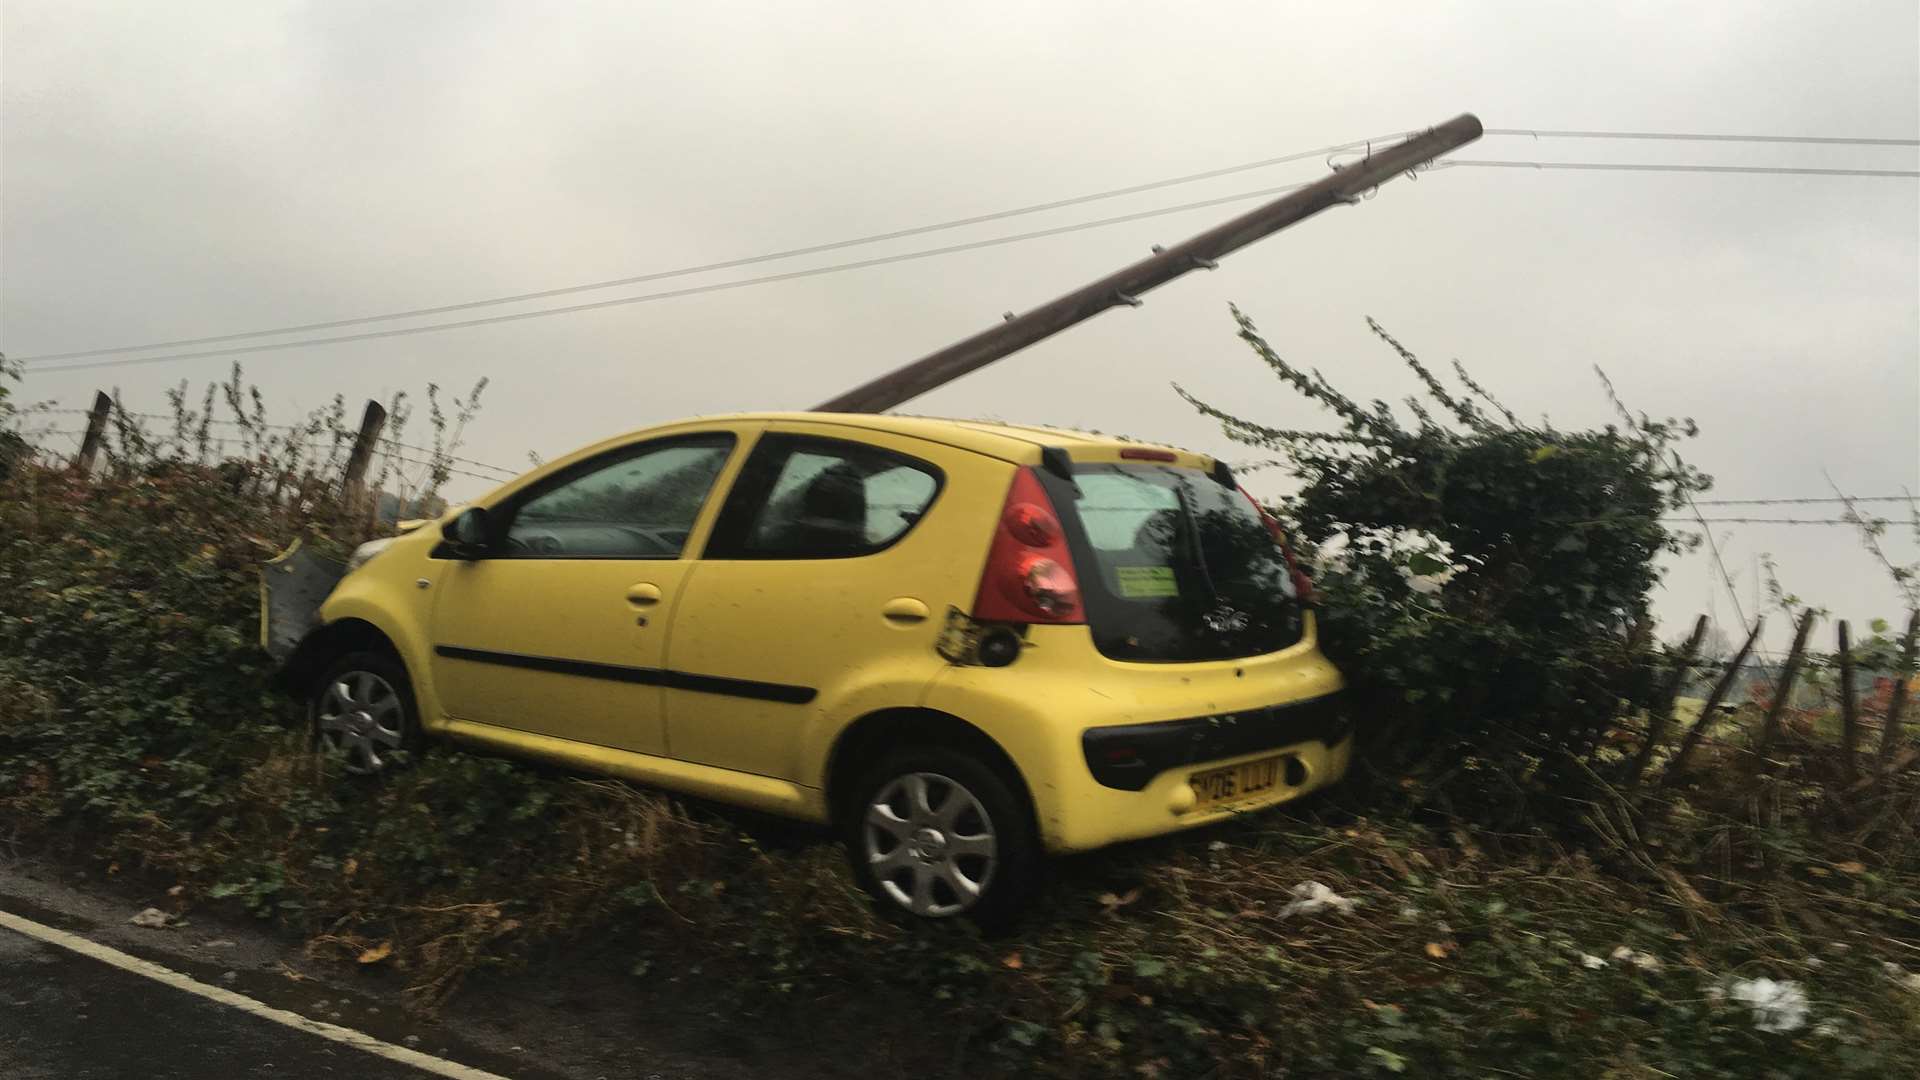 A car crashed into a telegraph pole